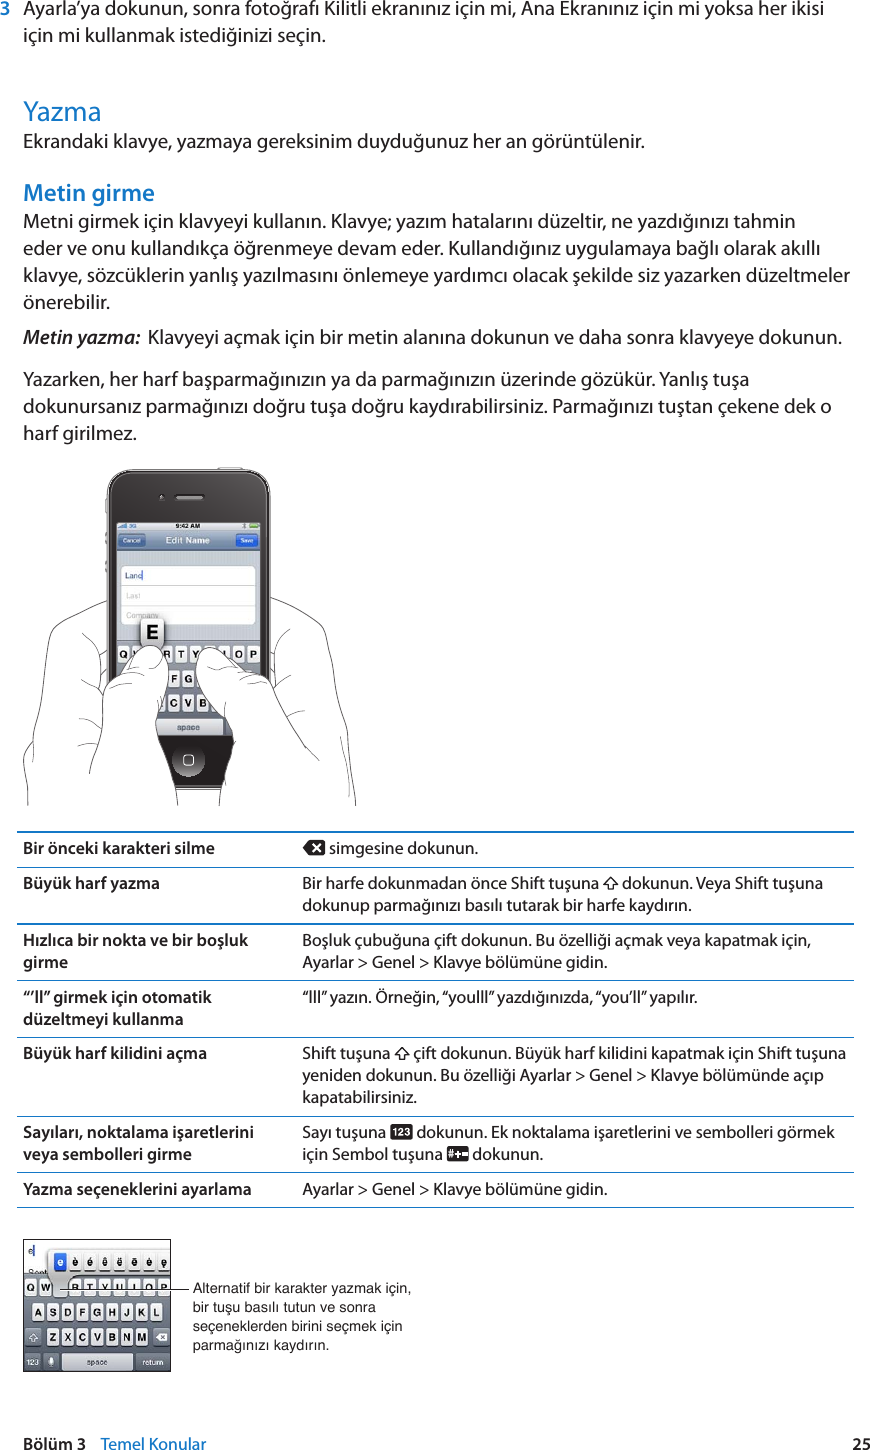 Apple Iphone 3gs Kullanma Kilavuzu User Manual I Phone I Os 5 1 Yazilimi Icin Ios5 Guide Tu